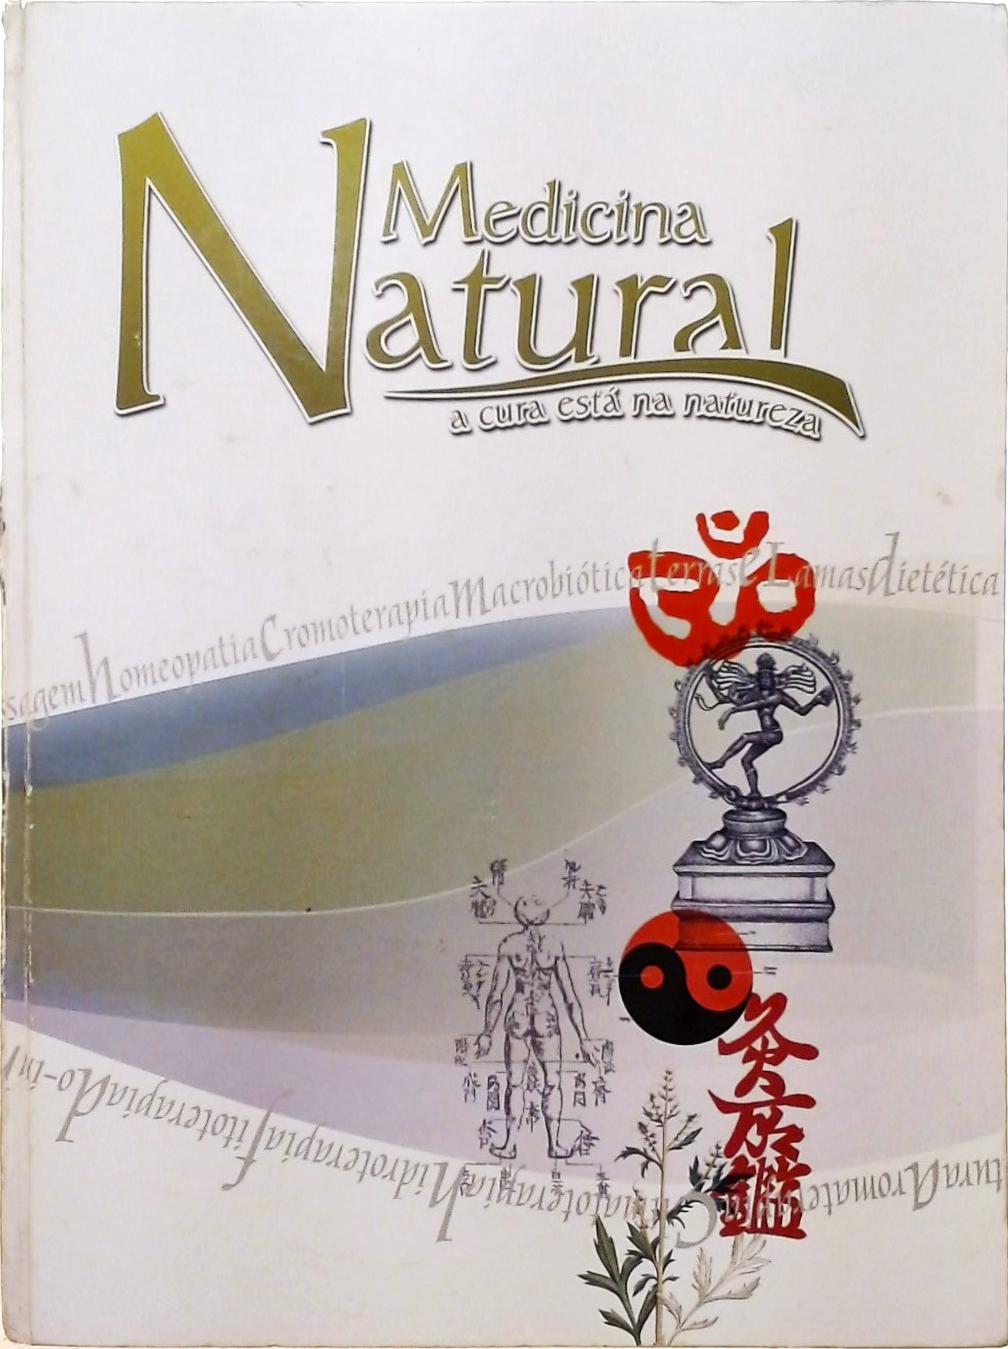 Medicina Natural - A Cura Está Na Natureza